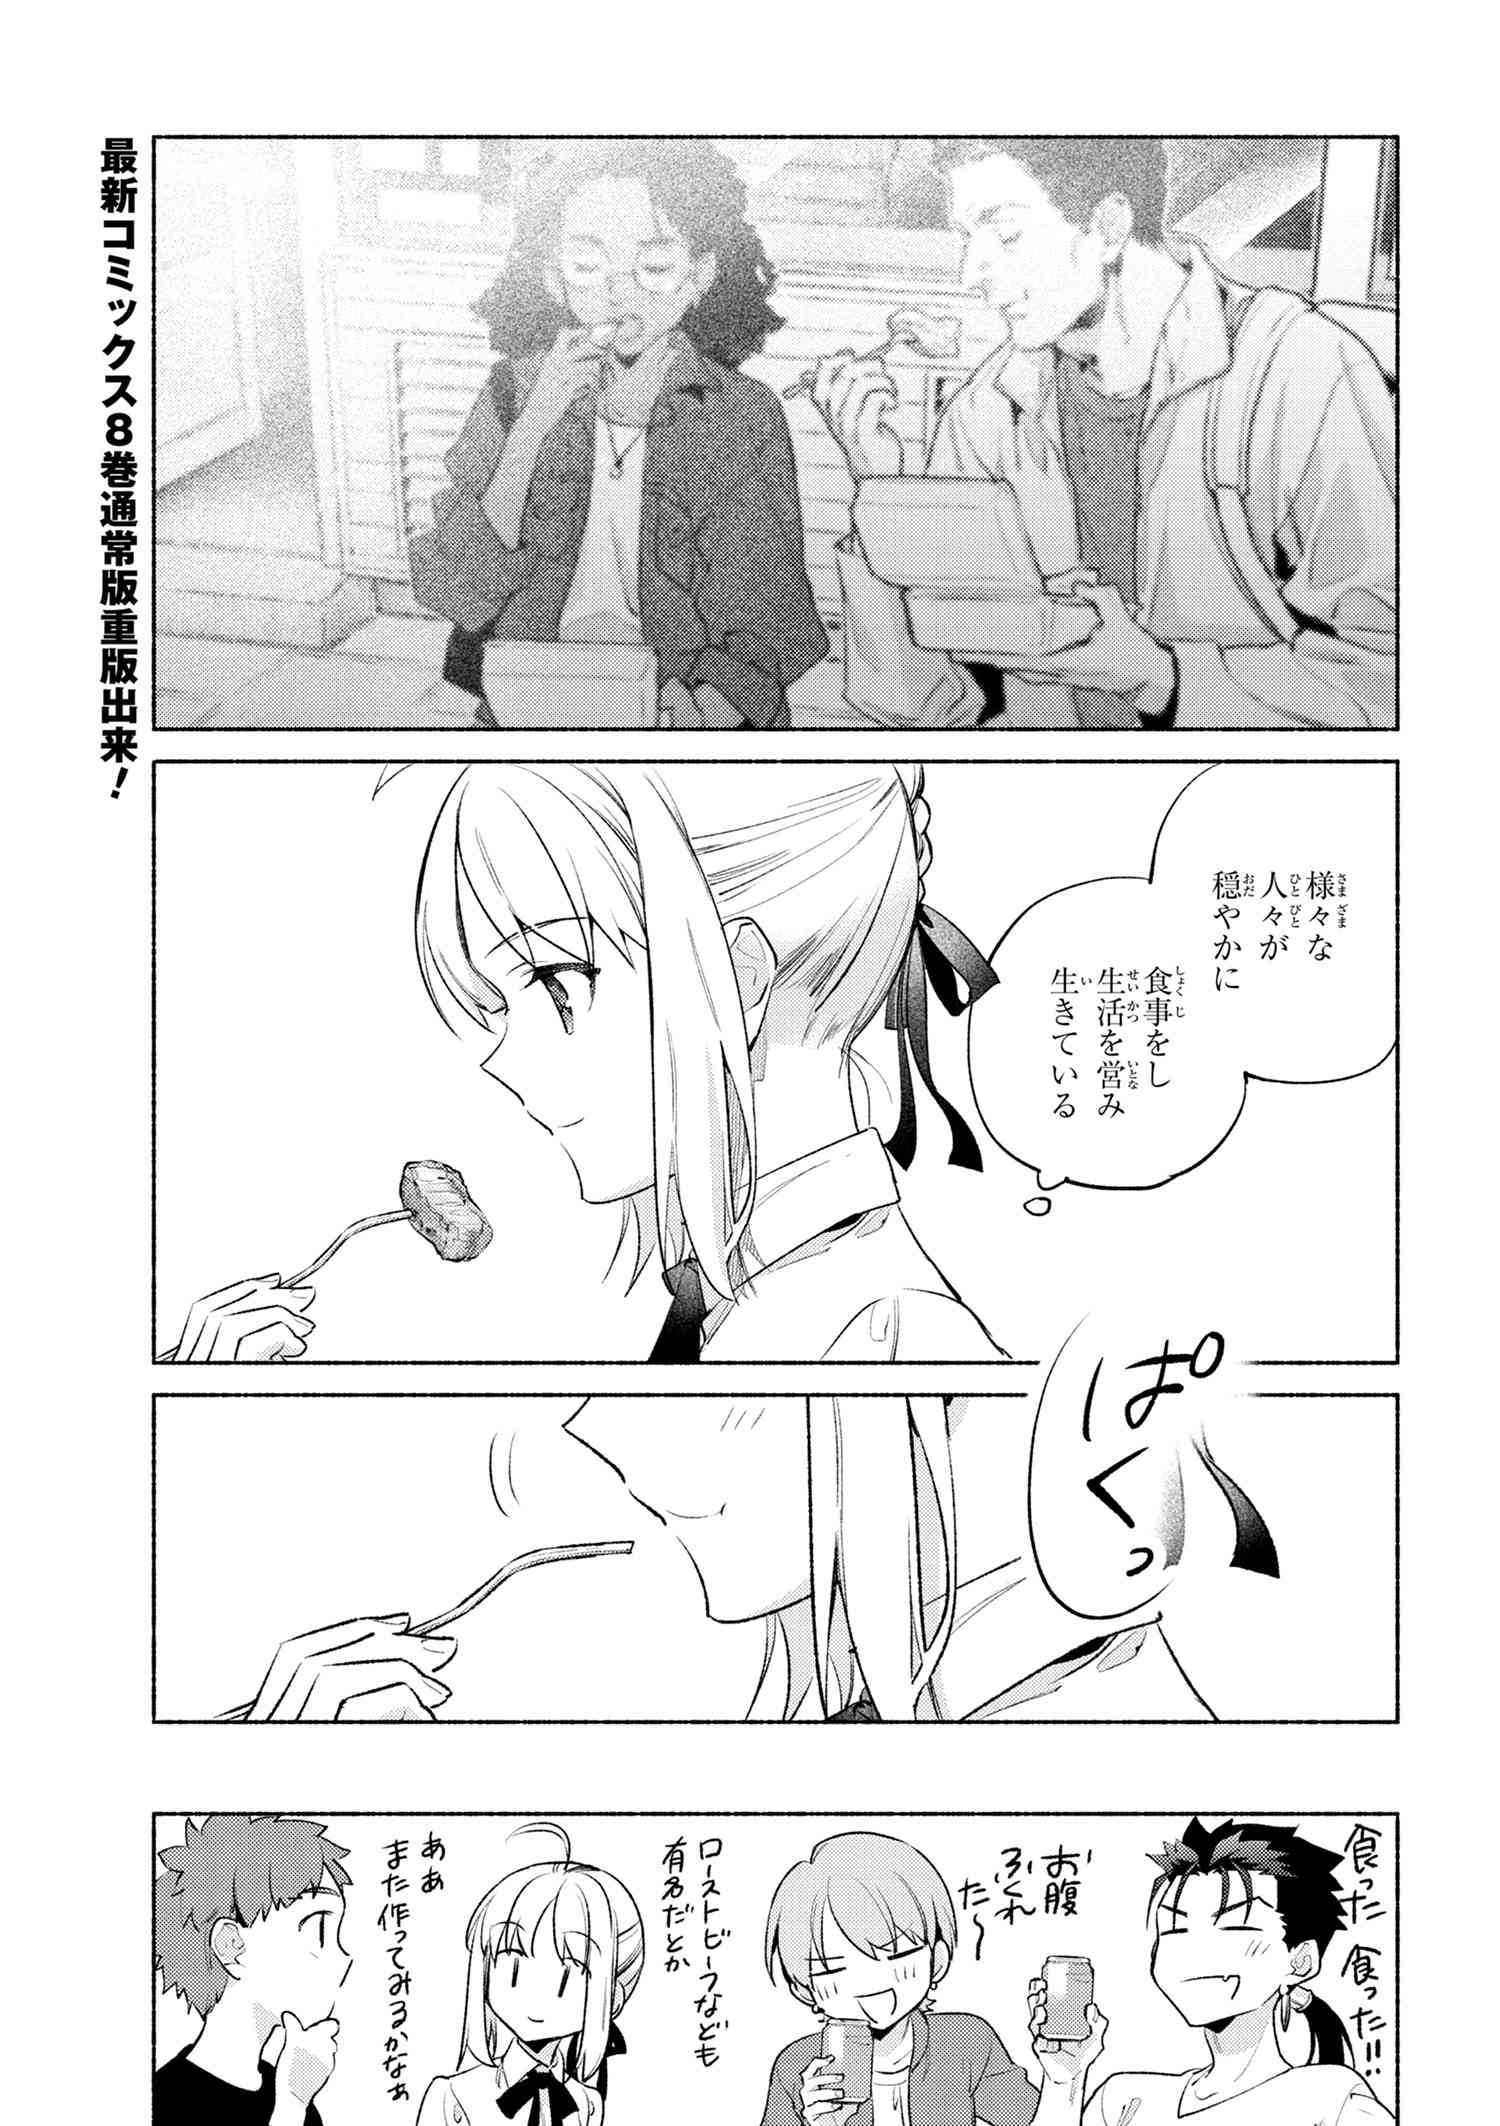 Emiya-san Chi no Kyou no Gohan - Chapter 58 - Page 19